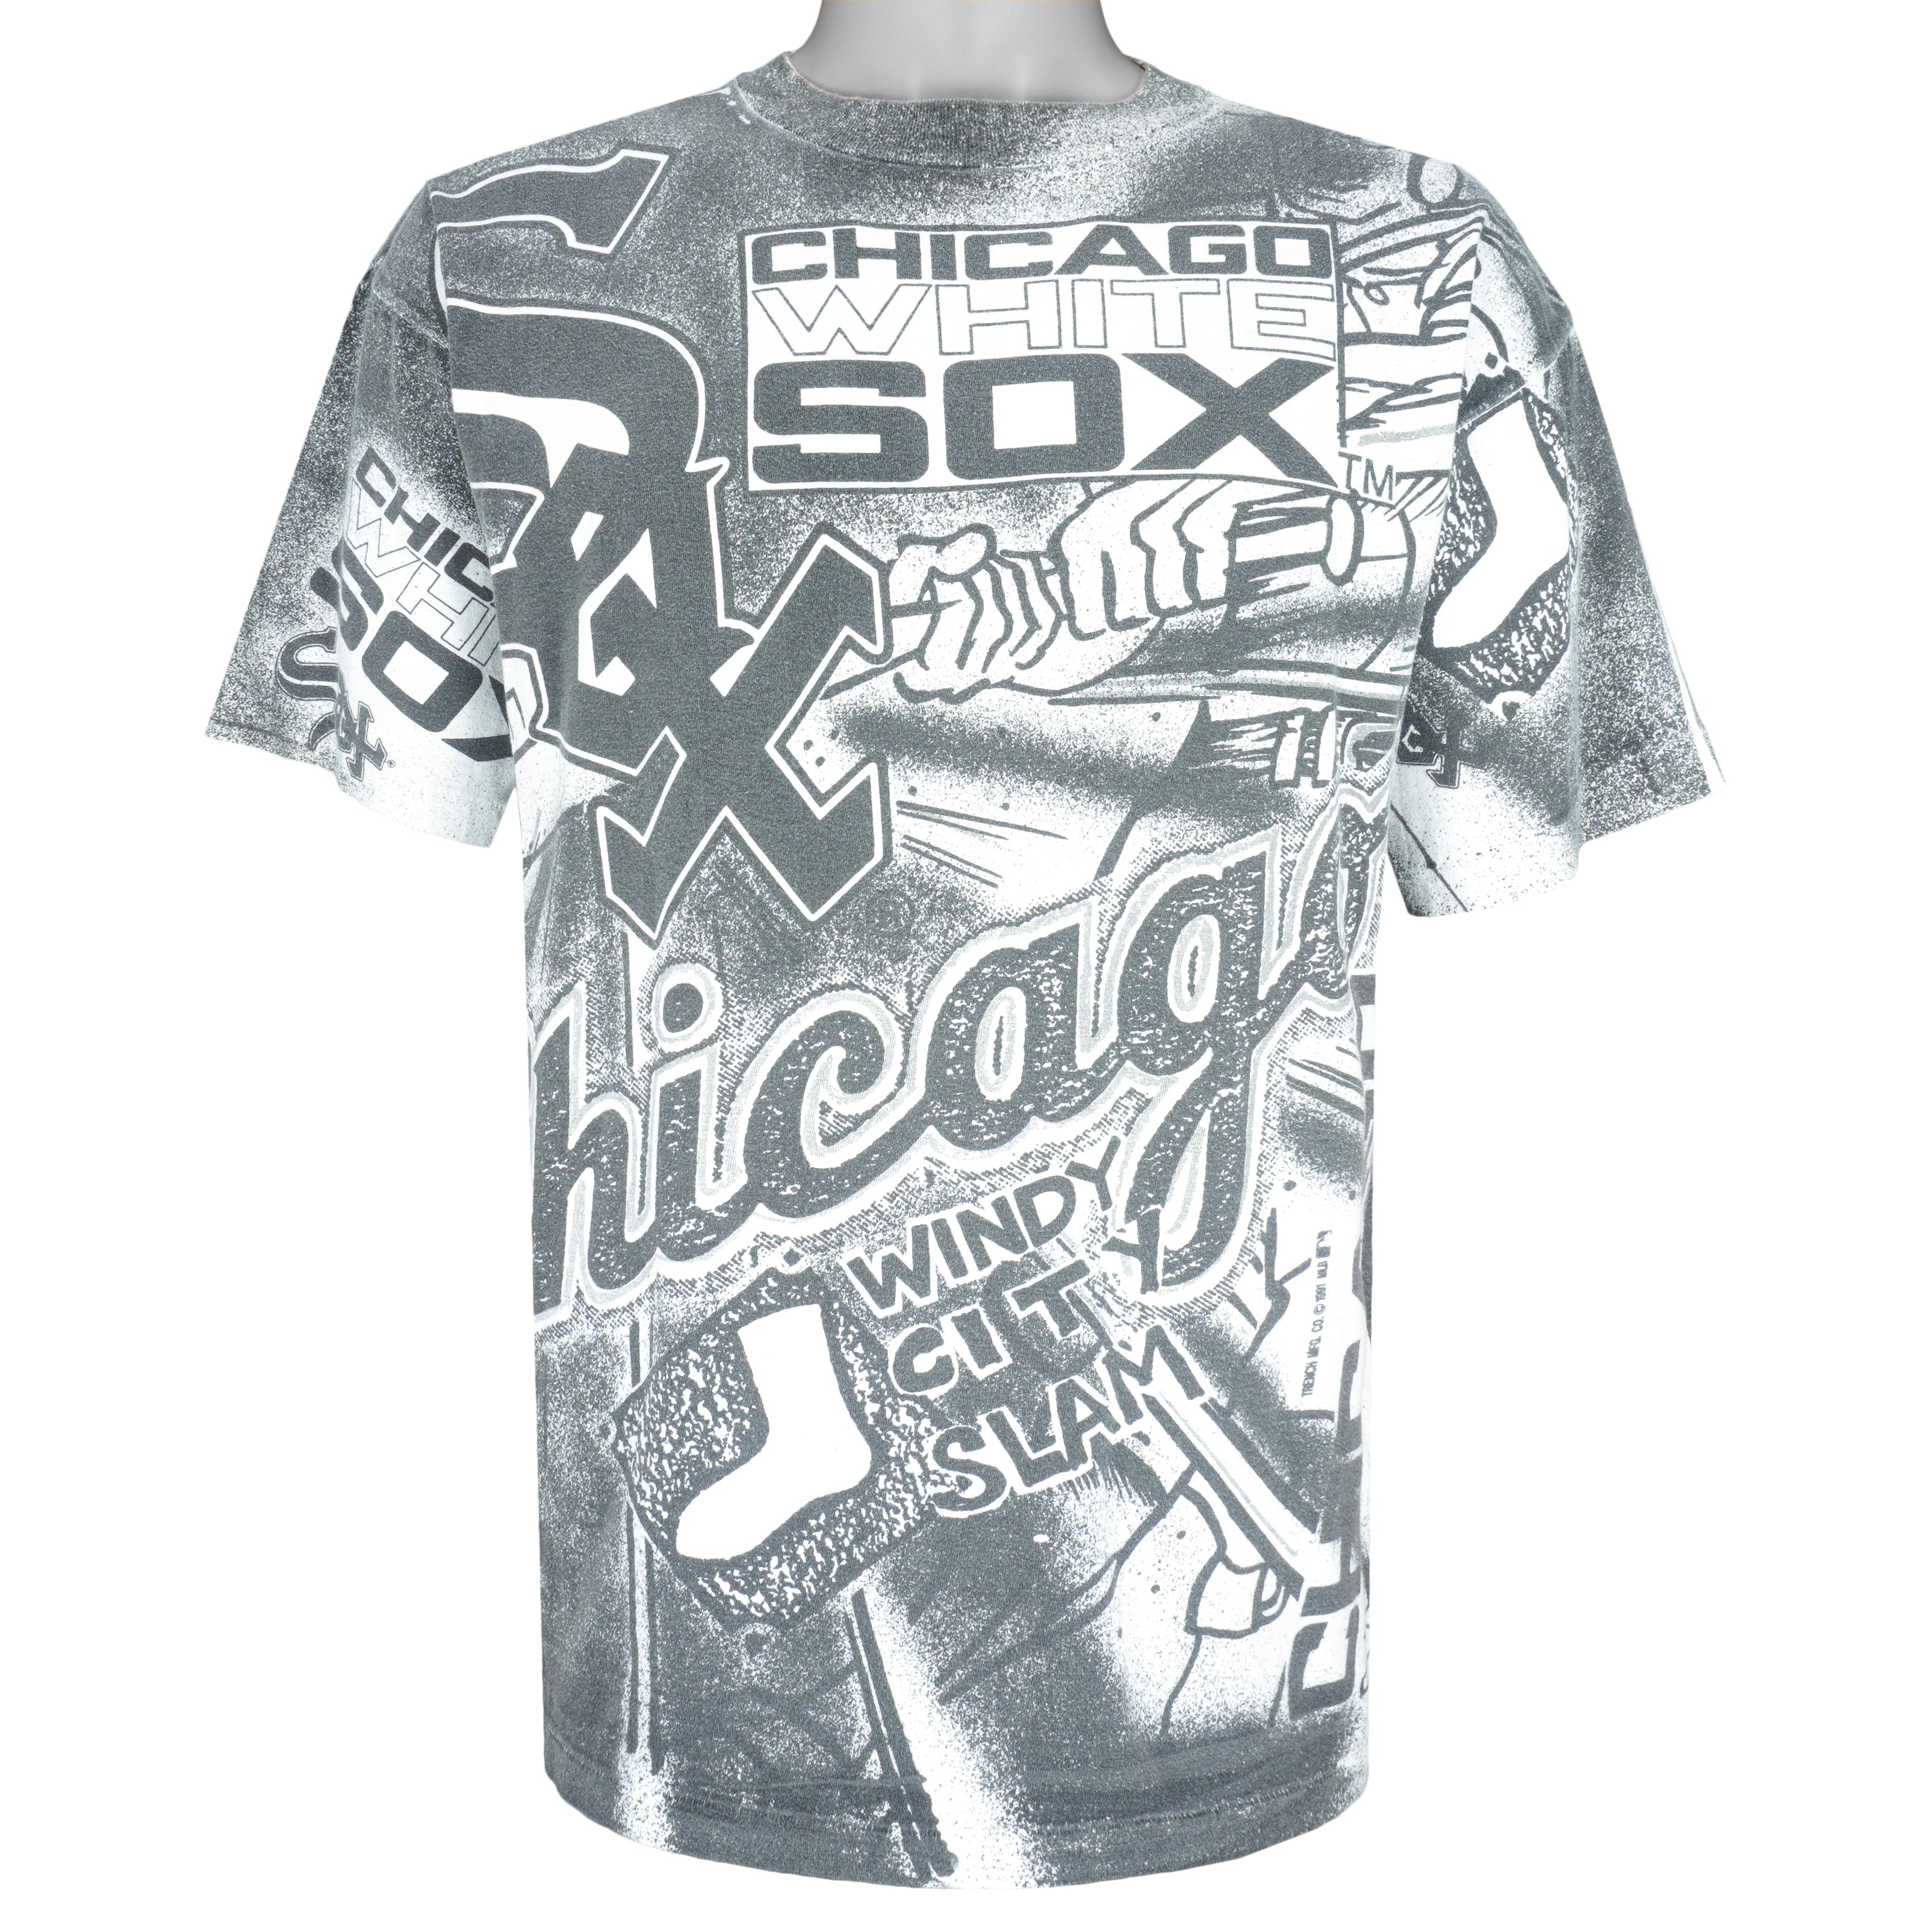 Chicago White Sox T-Shirts, White Sox Tees, Chicago White Sox Shirts